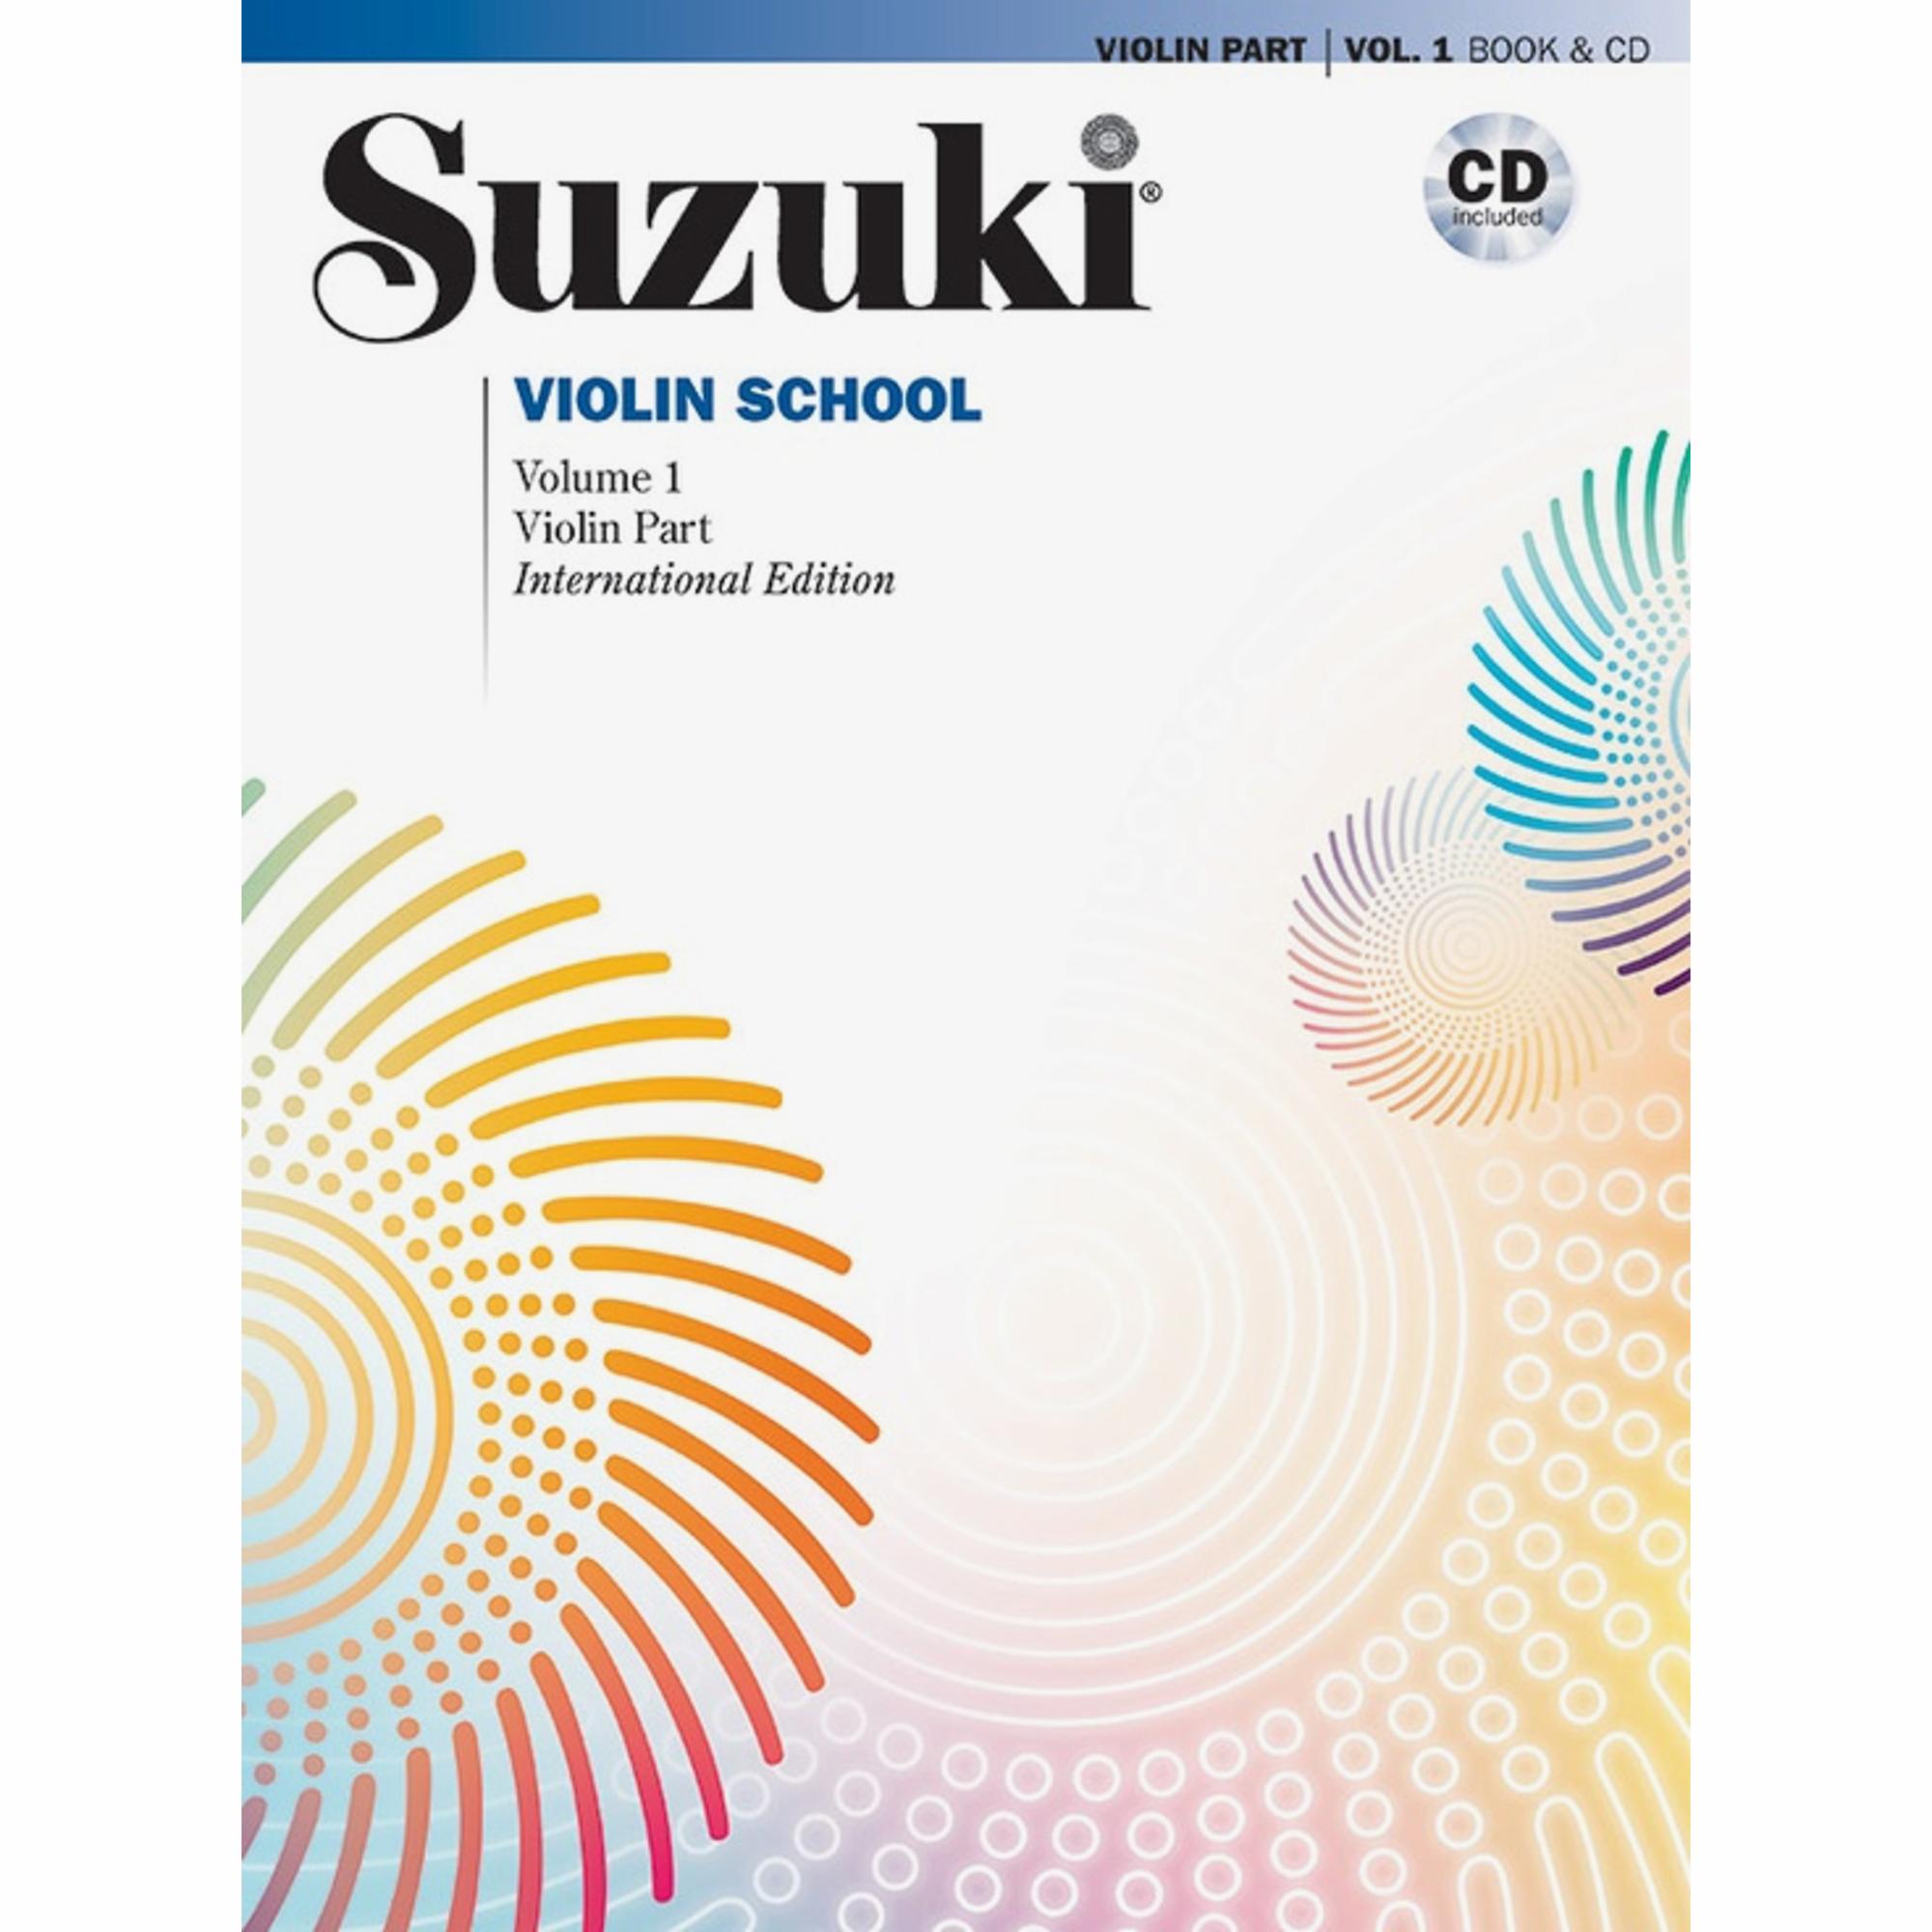 Suzuki Violin School: Violin Part and CD Combo Packs